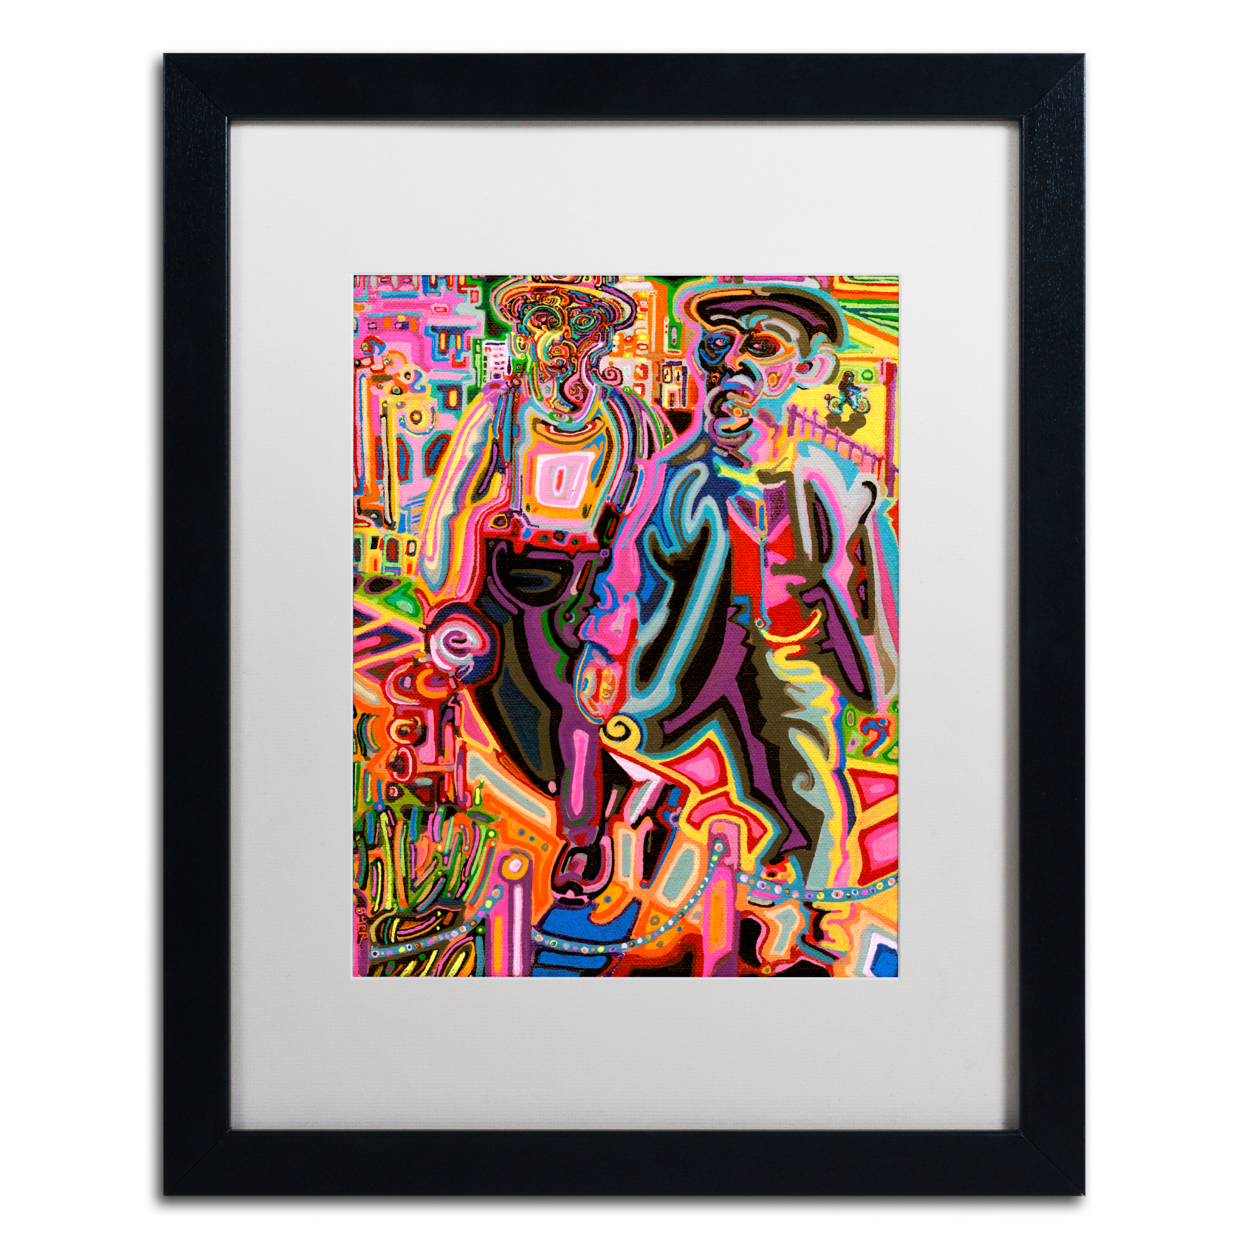 Josh Byer 'Thugs' Black Wooden Framed Art 18 X 22 Inches